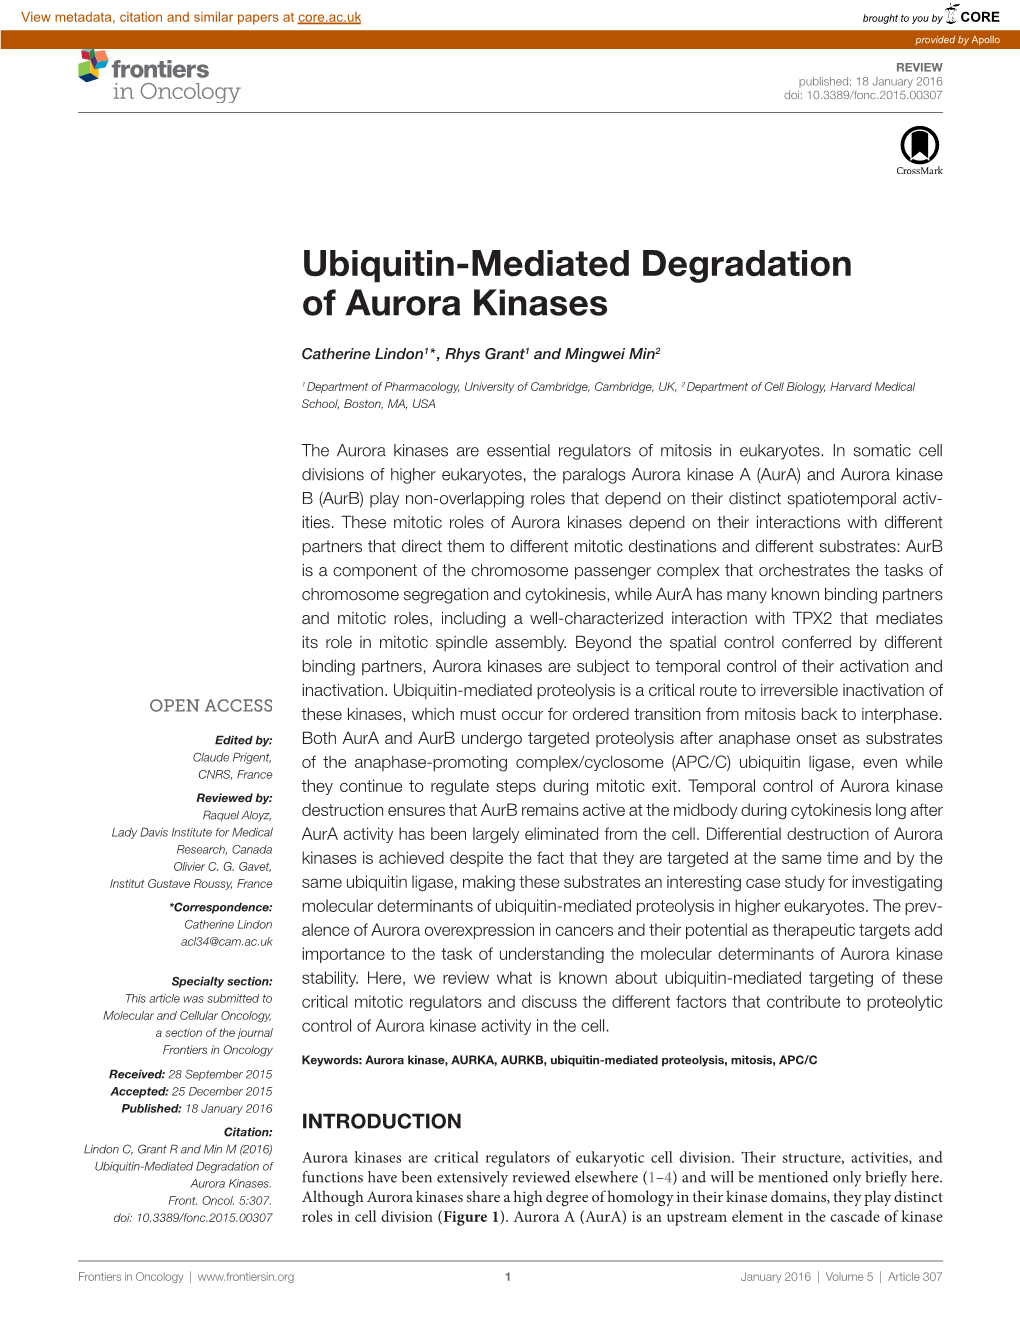 Ubiquitin-Mediated Degradation of Aurora Kinases